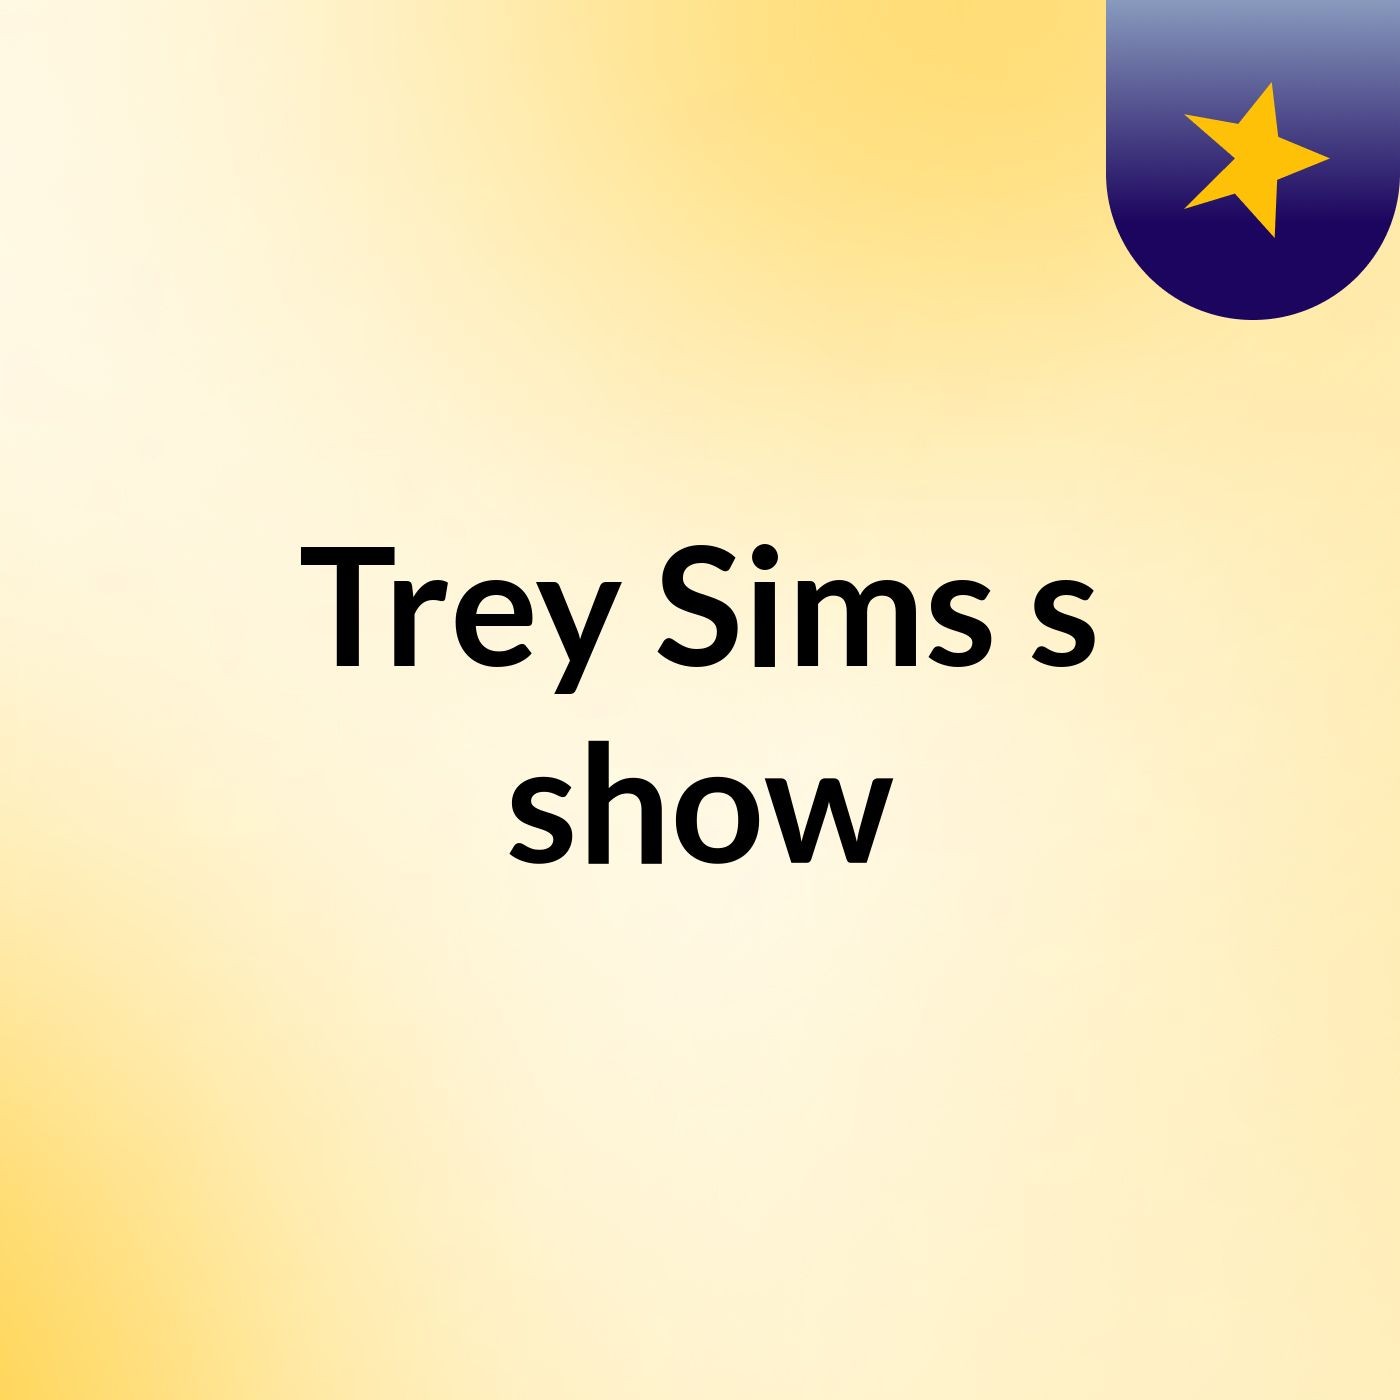 Trey Sims's show